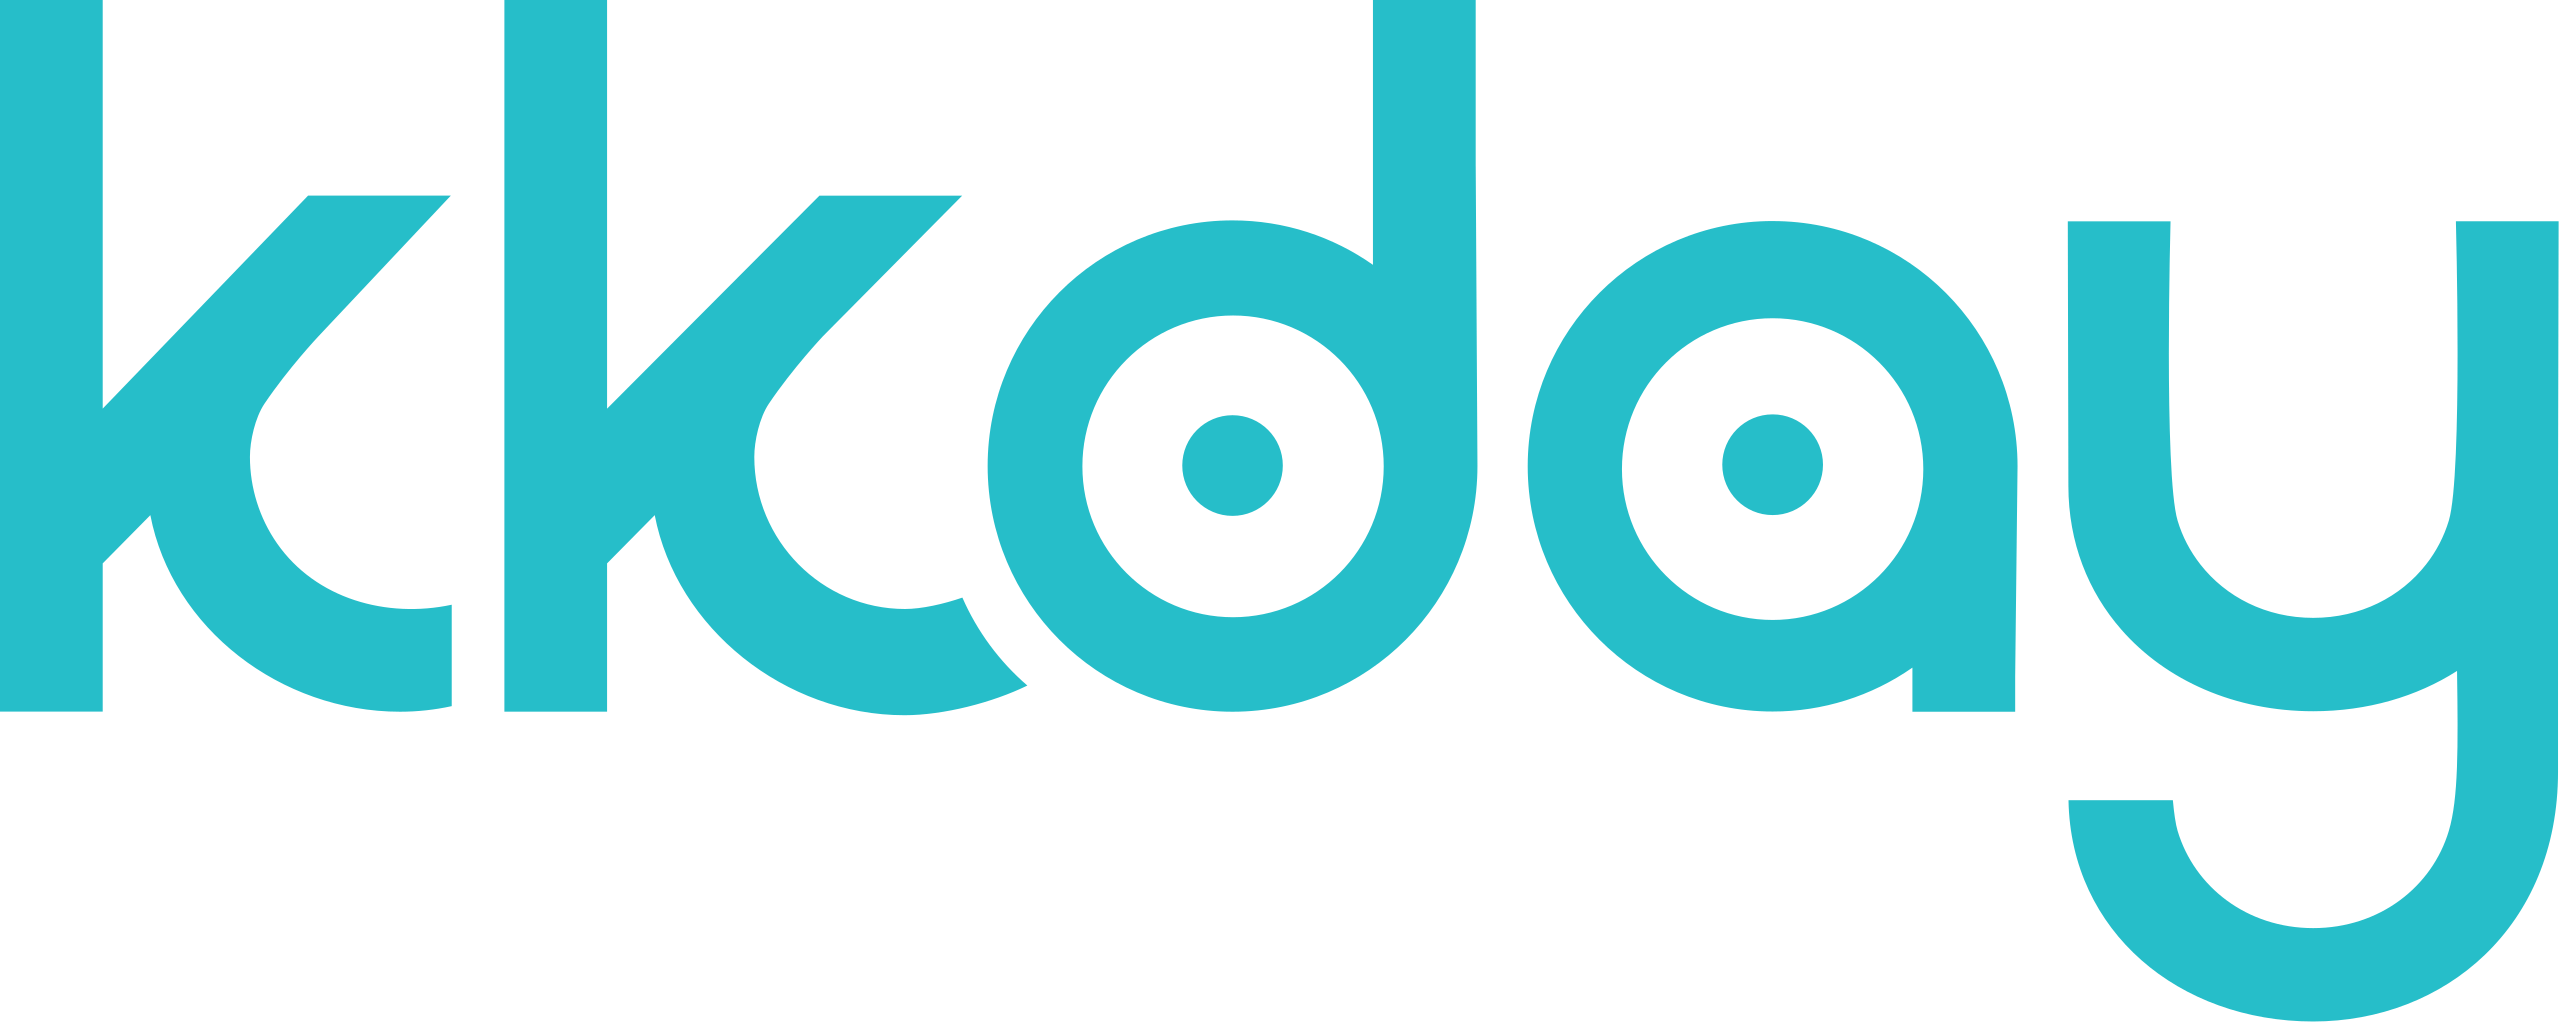 kkday-logo-coco pr-singapore